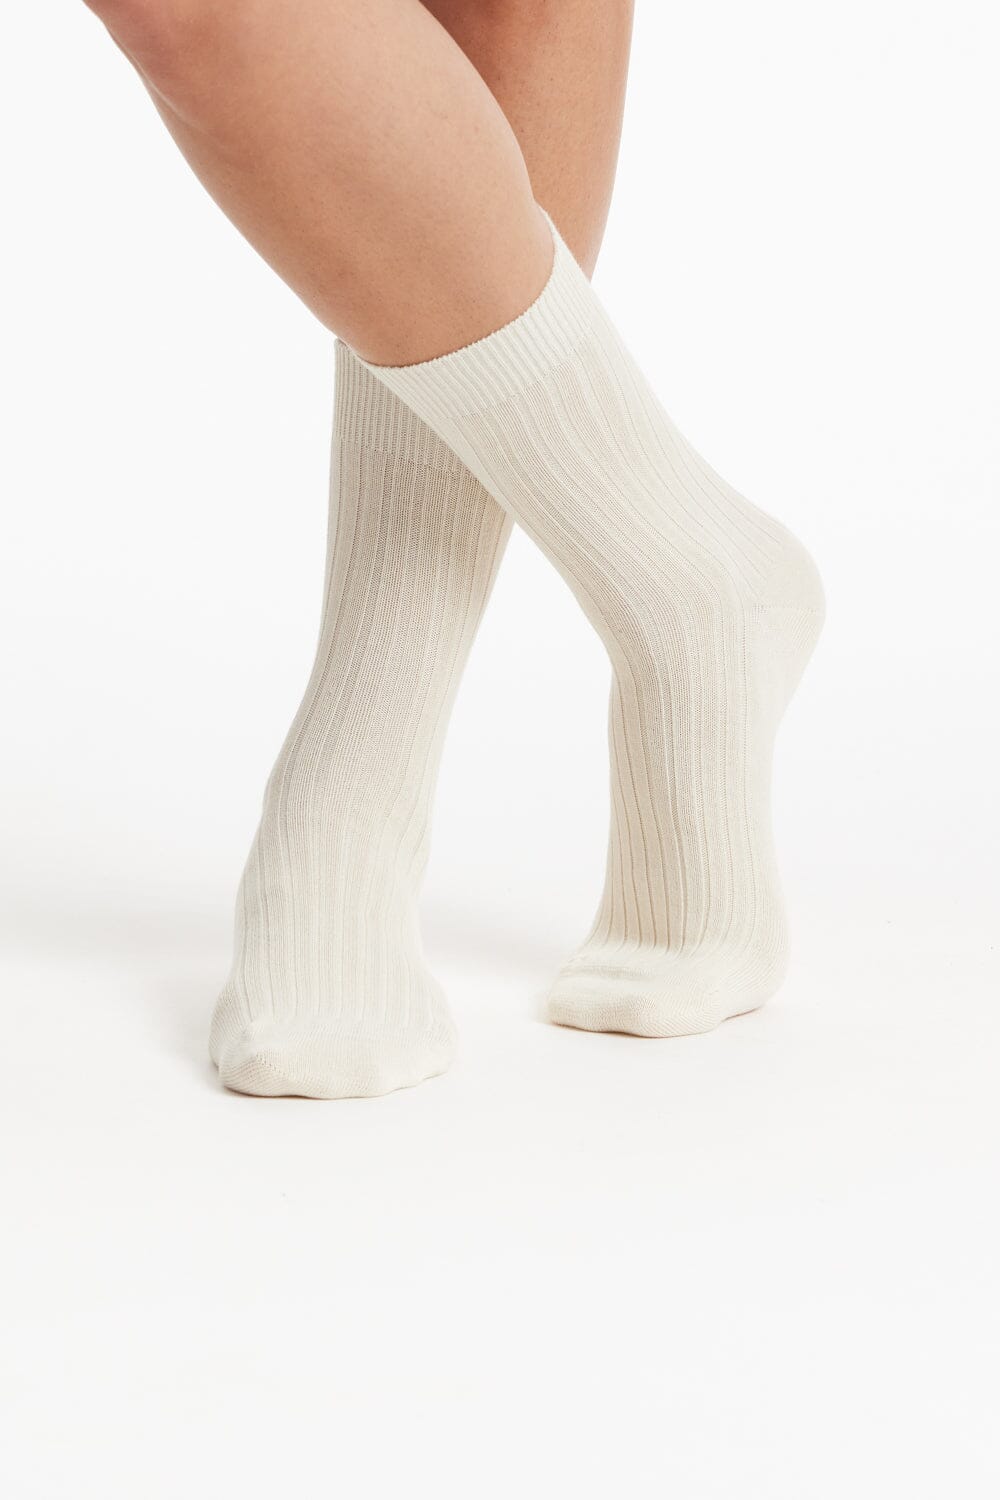 People Tree - Rib Socks - Organic Certified Cotton - Weekendbee - sustainable sportswear